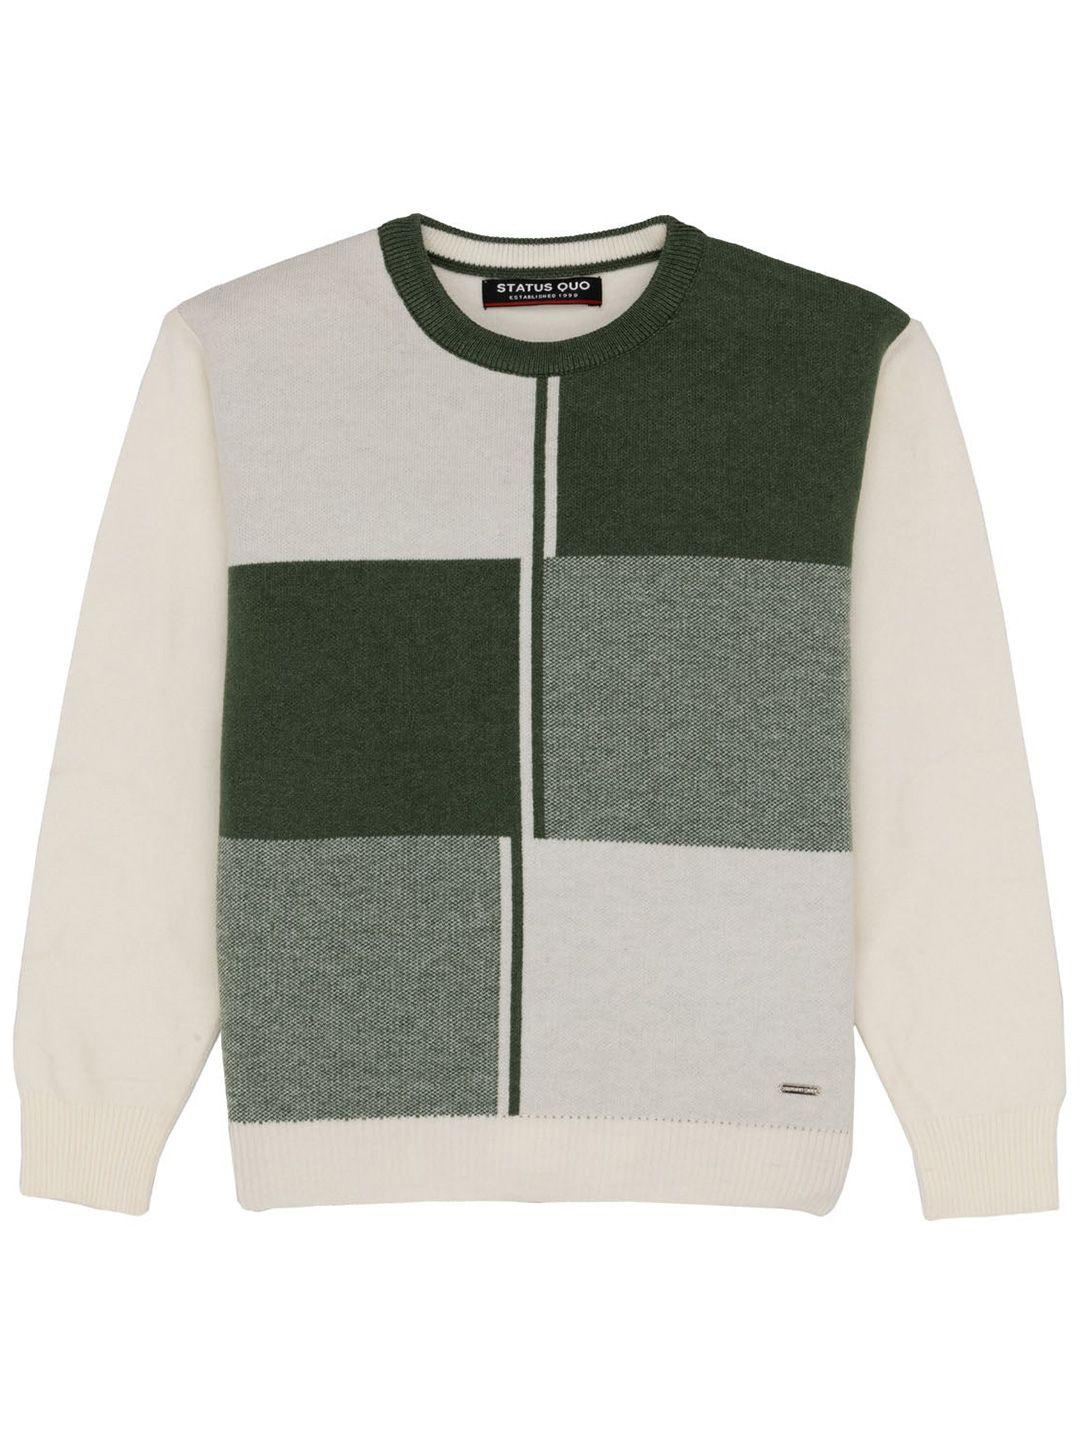 status quo boys colourblocked acrylic pullover sweater